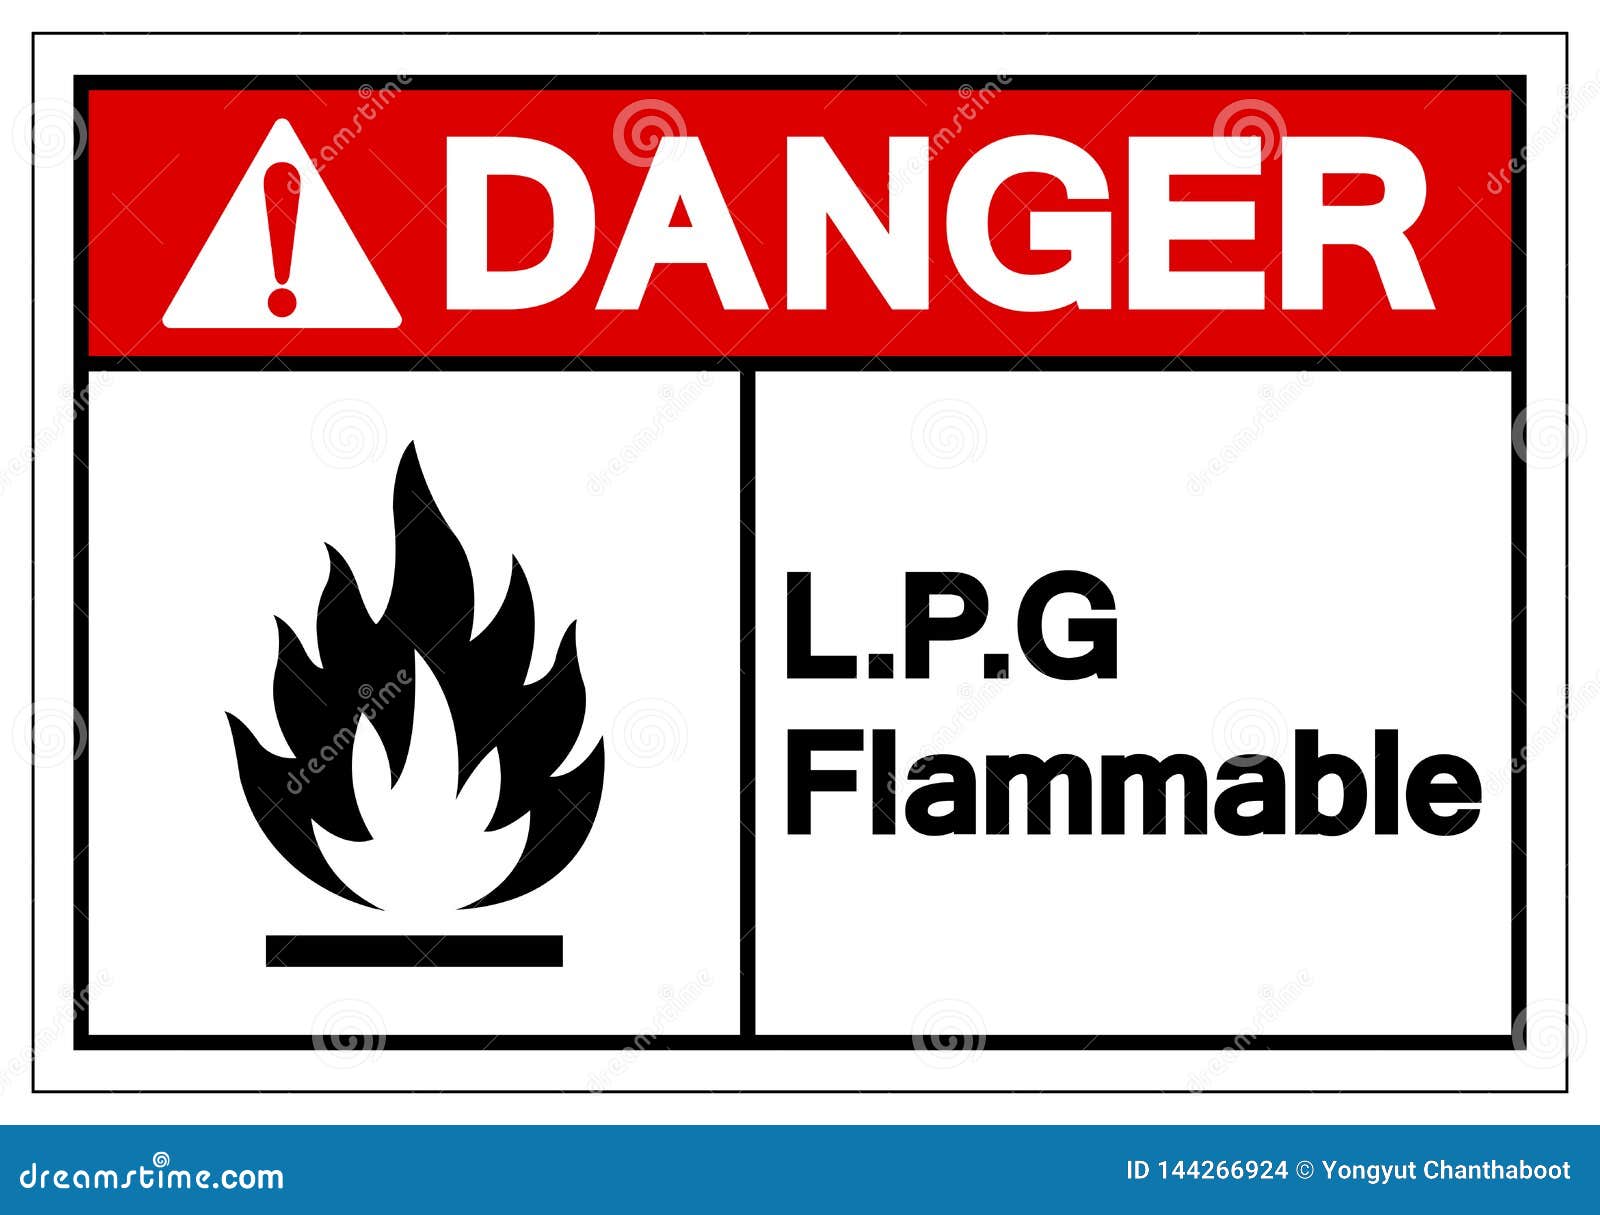 Danger l.p.g hautement inflammable 